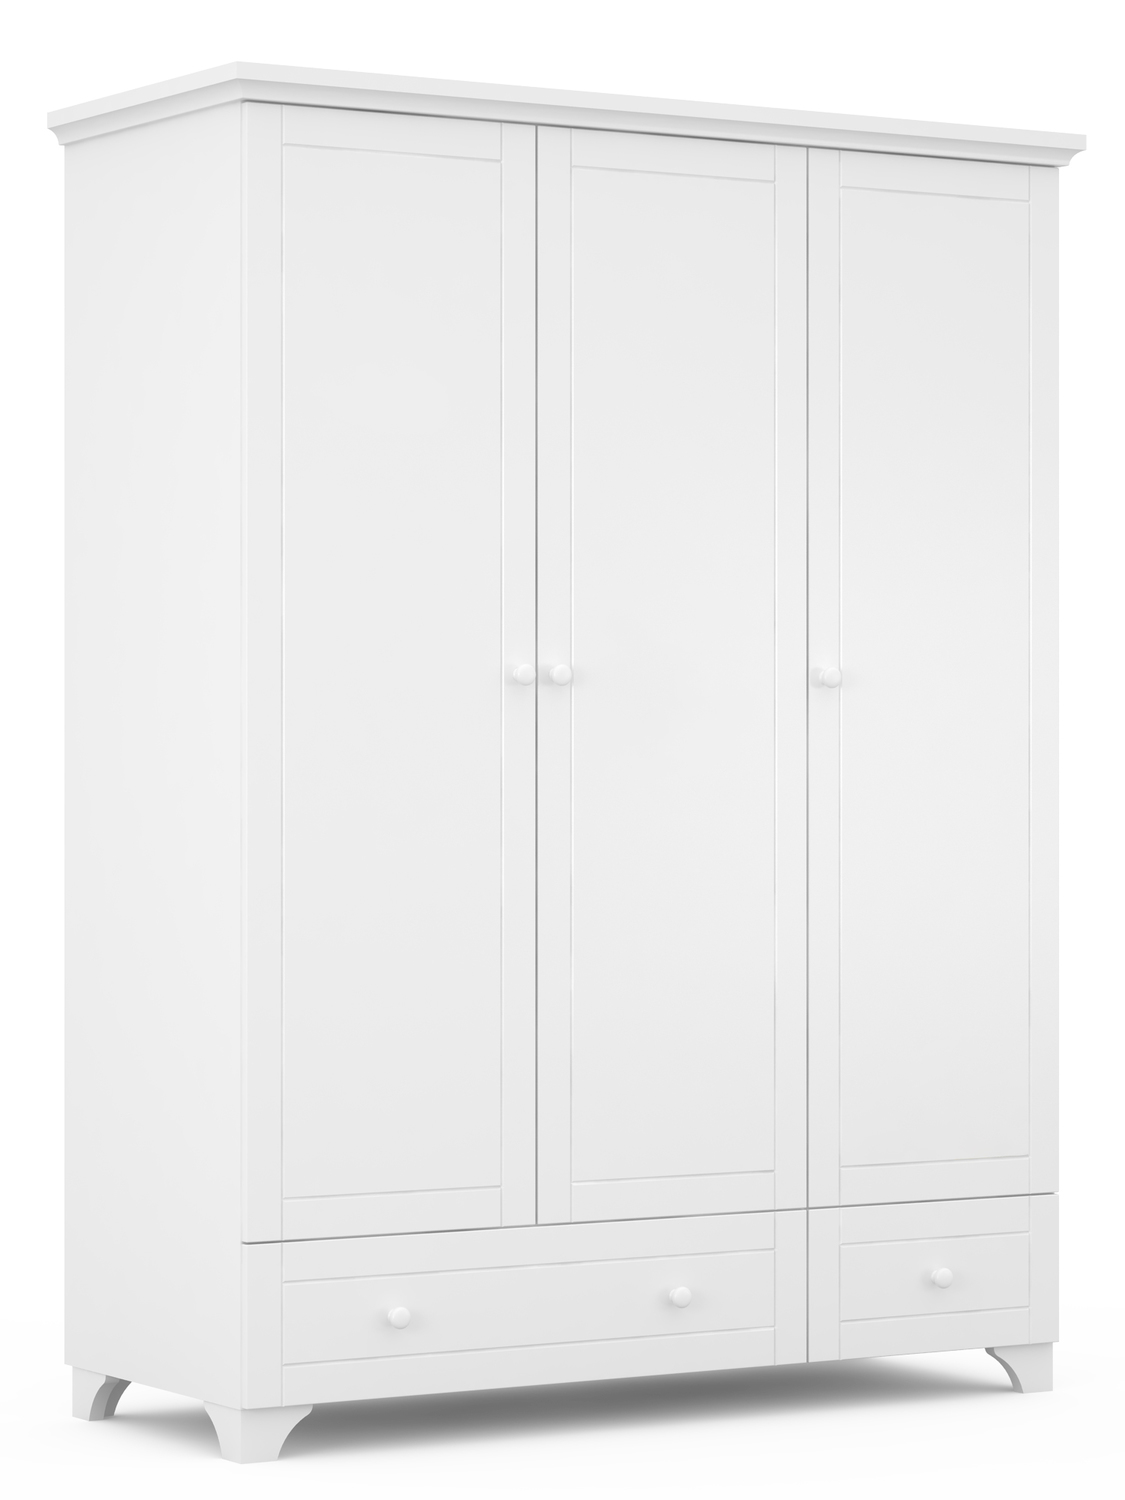 Wardrobe 150 Simple White - Meblik